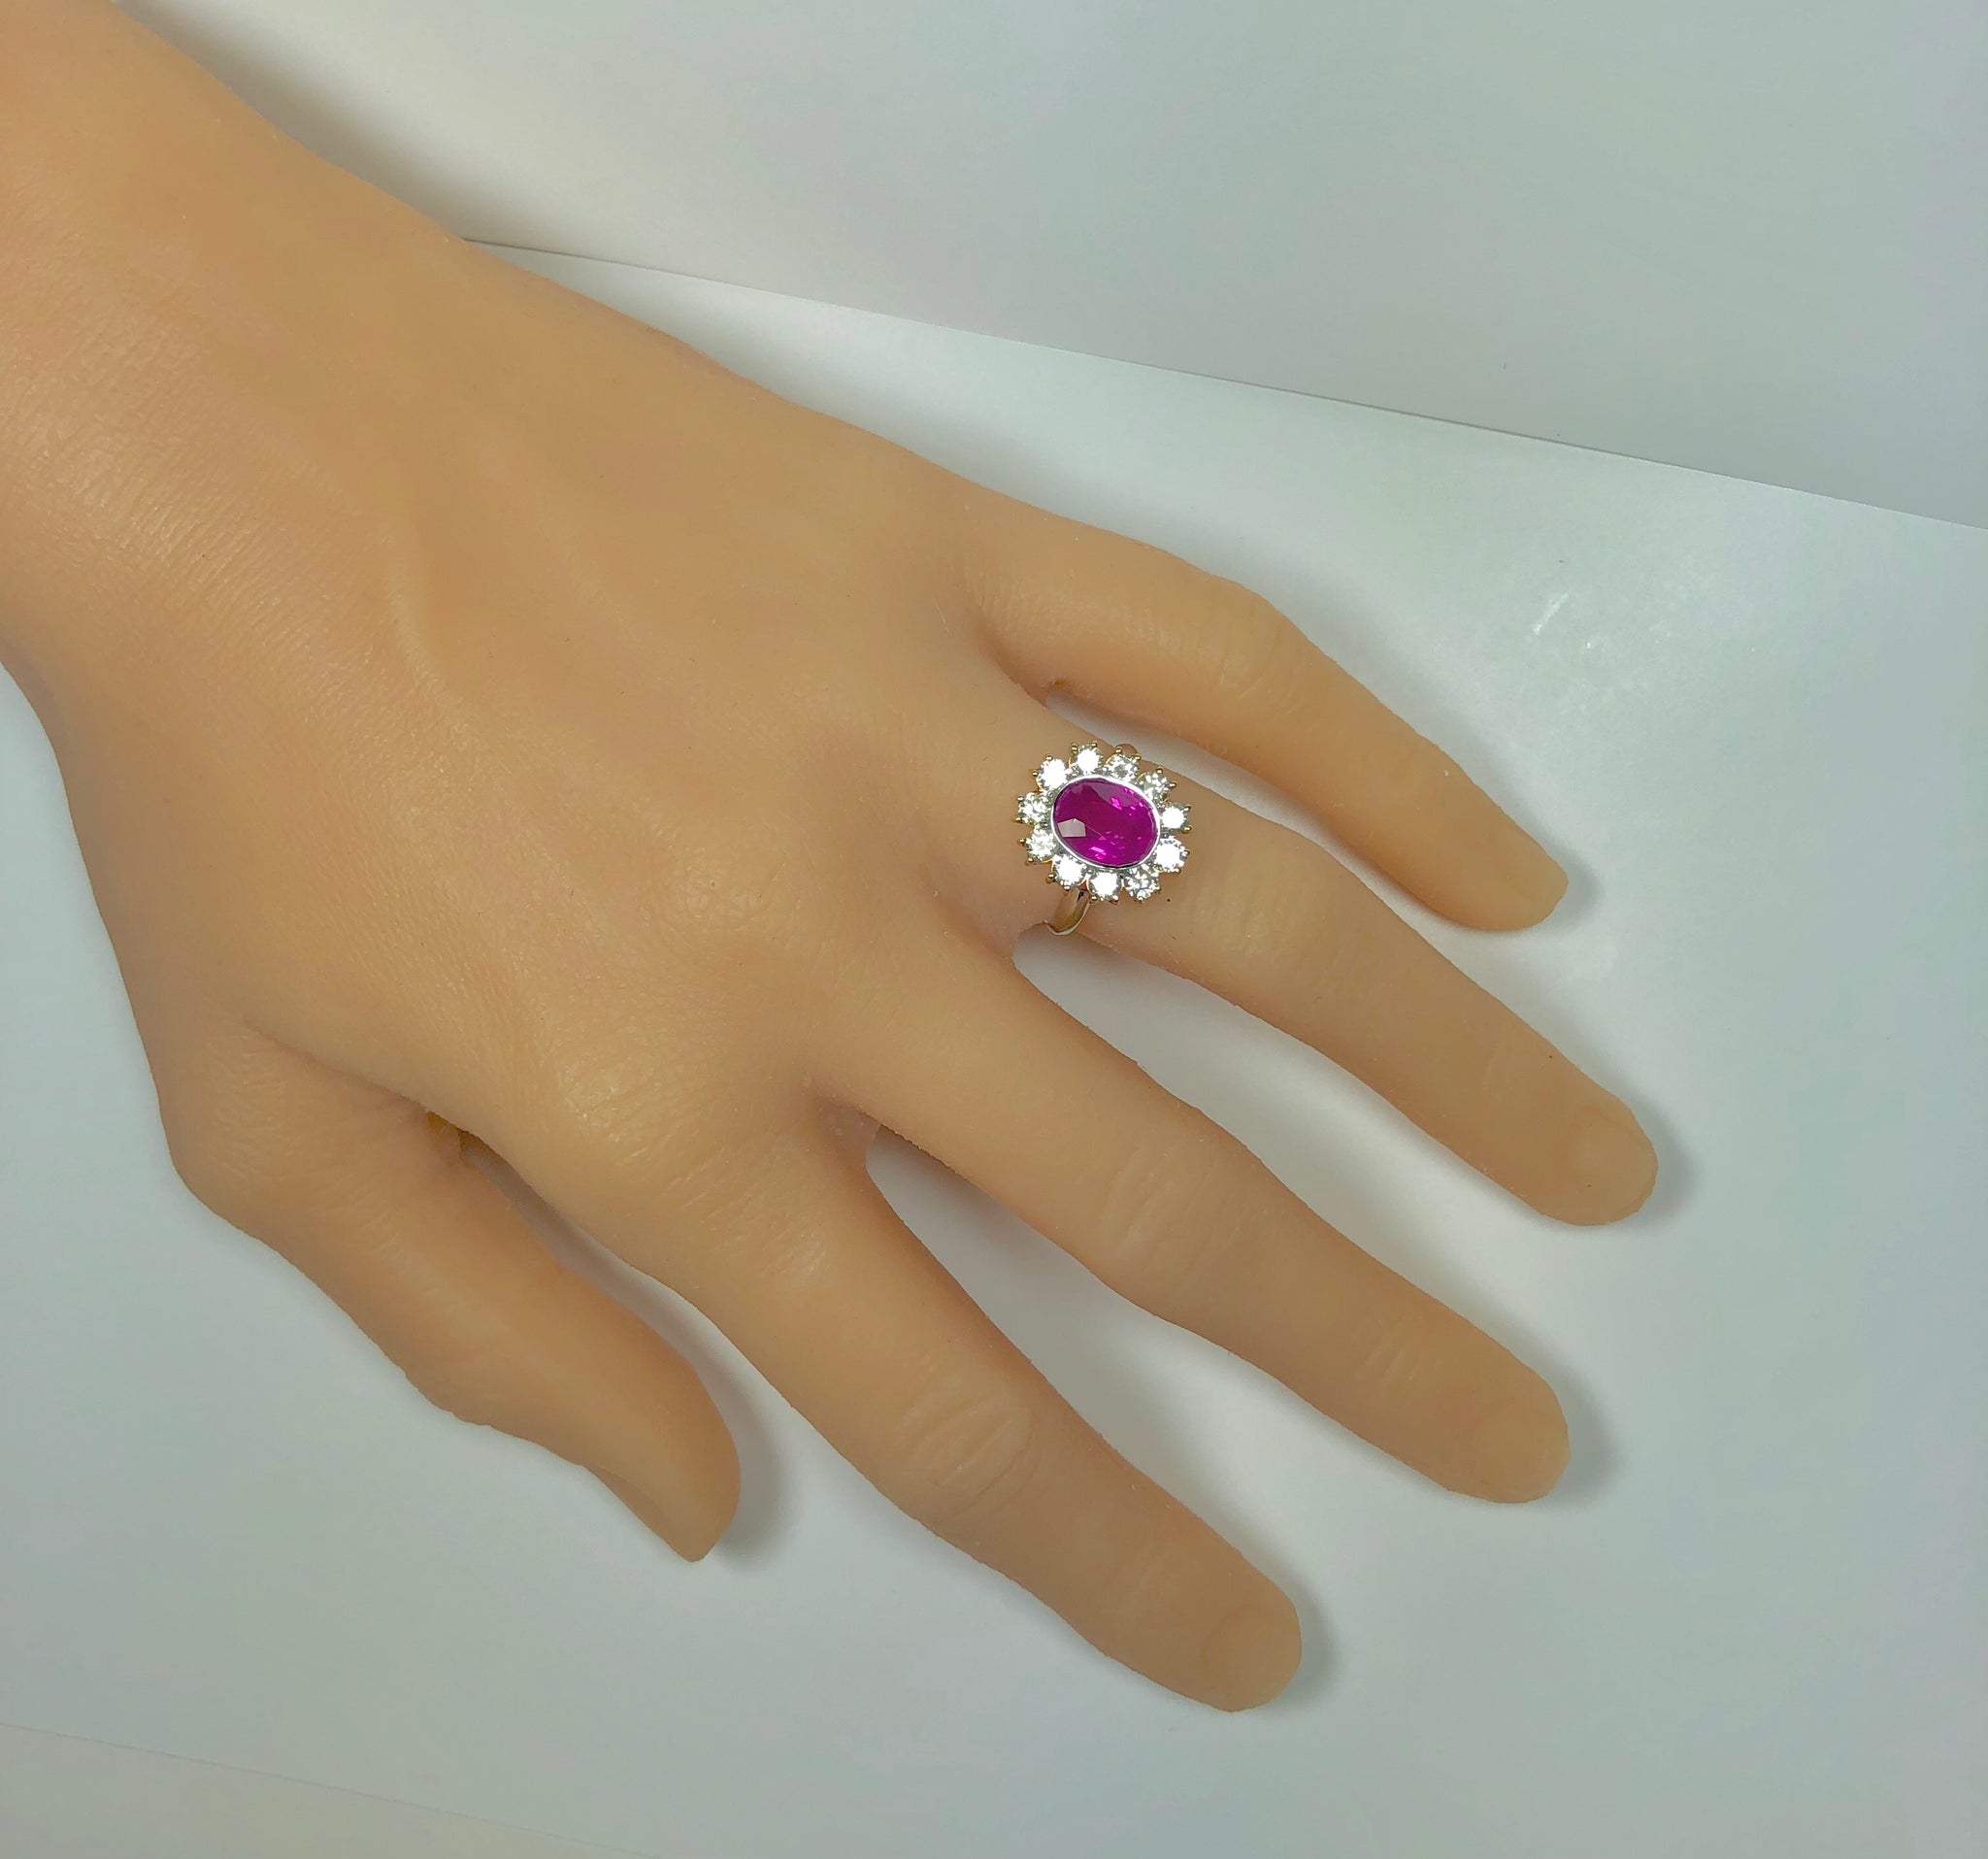 4.64 Carat Burma Pink Sapphire and Diamond Ring 18K Gold